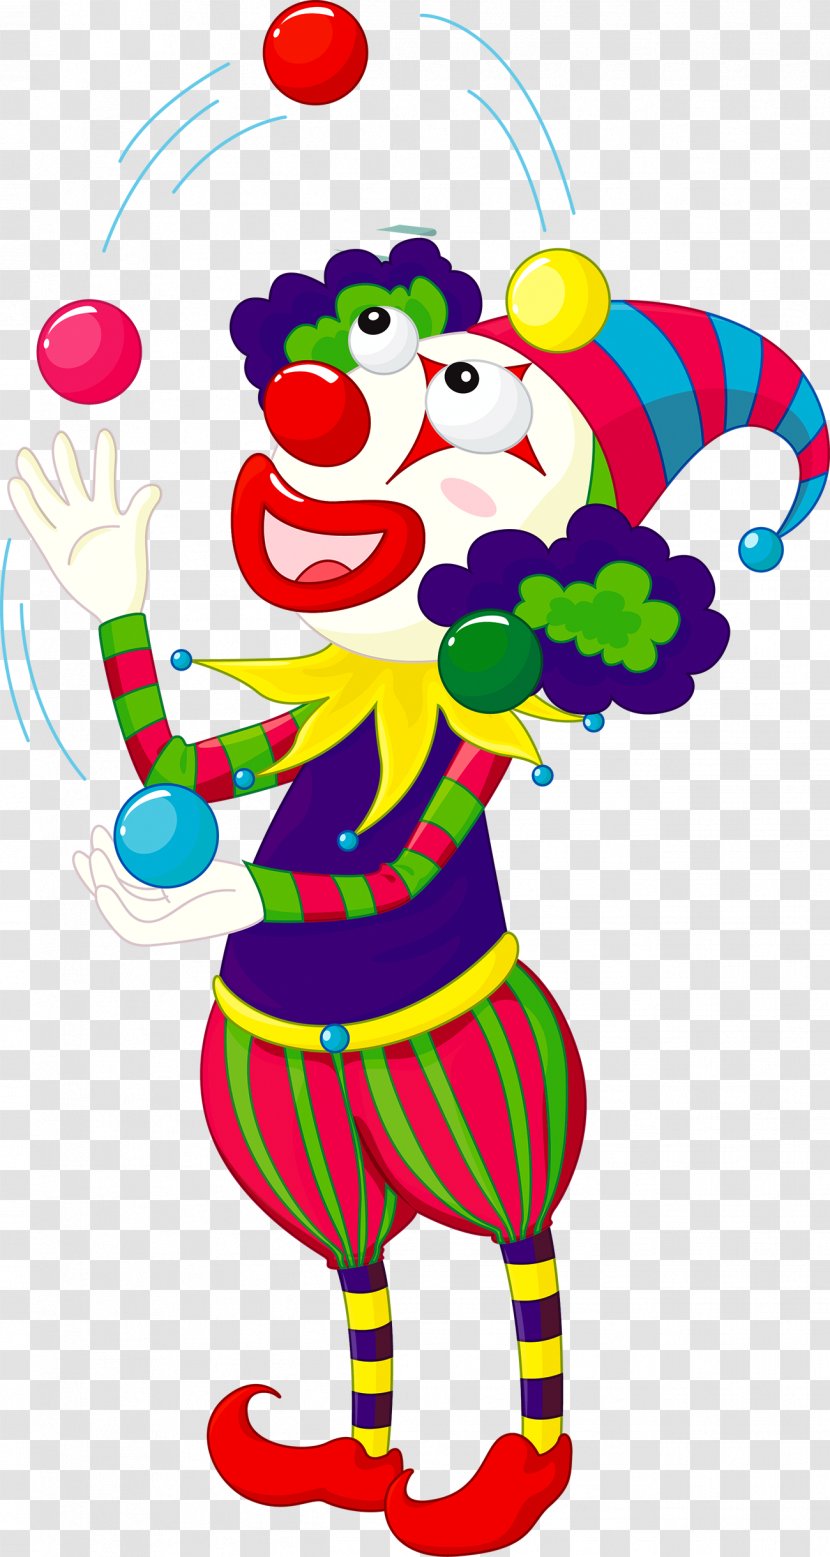 Clown Circus Juggling Illustration Transparent PNG